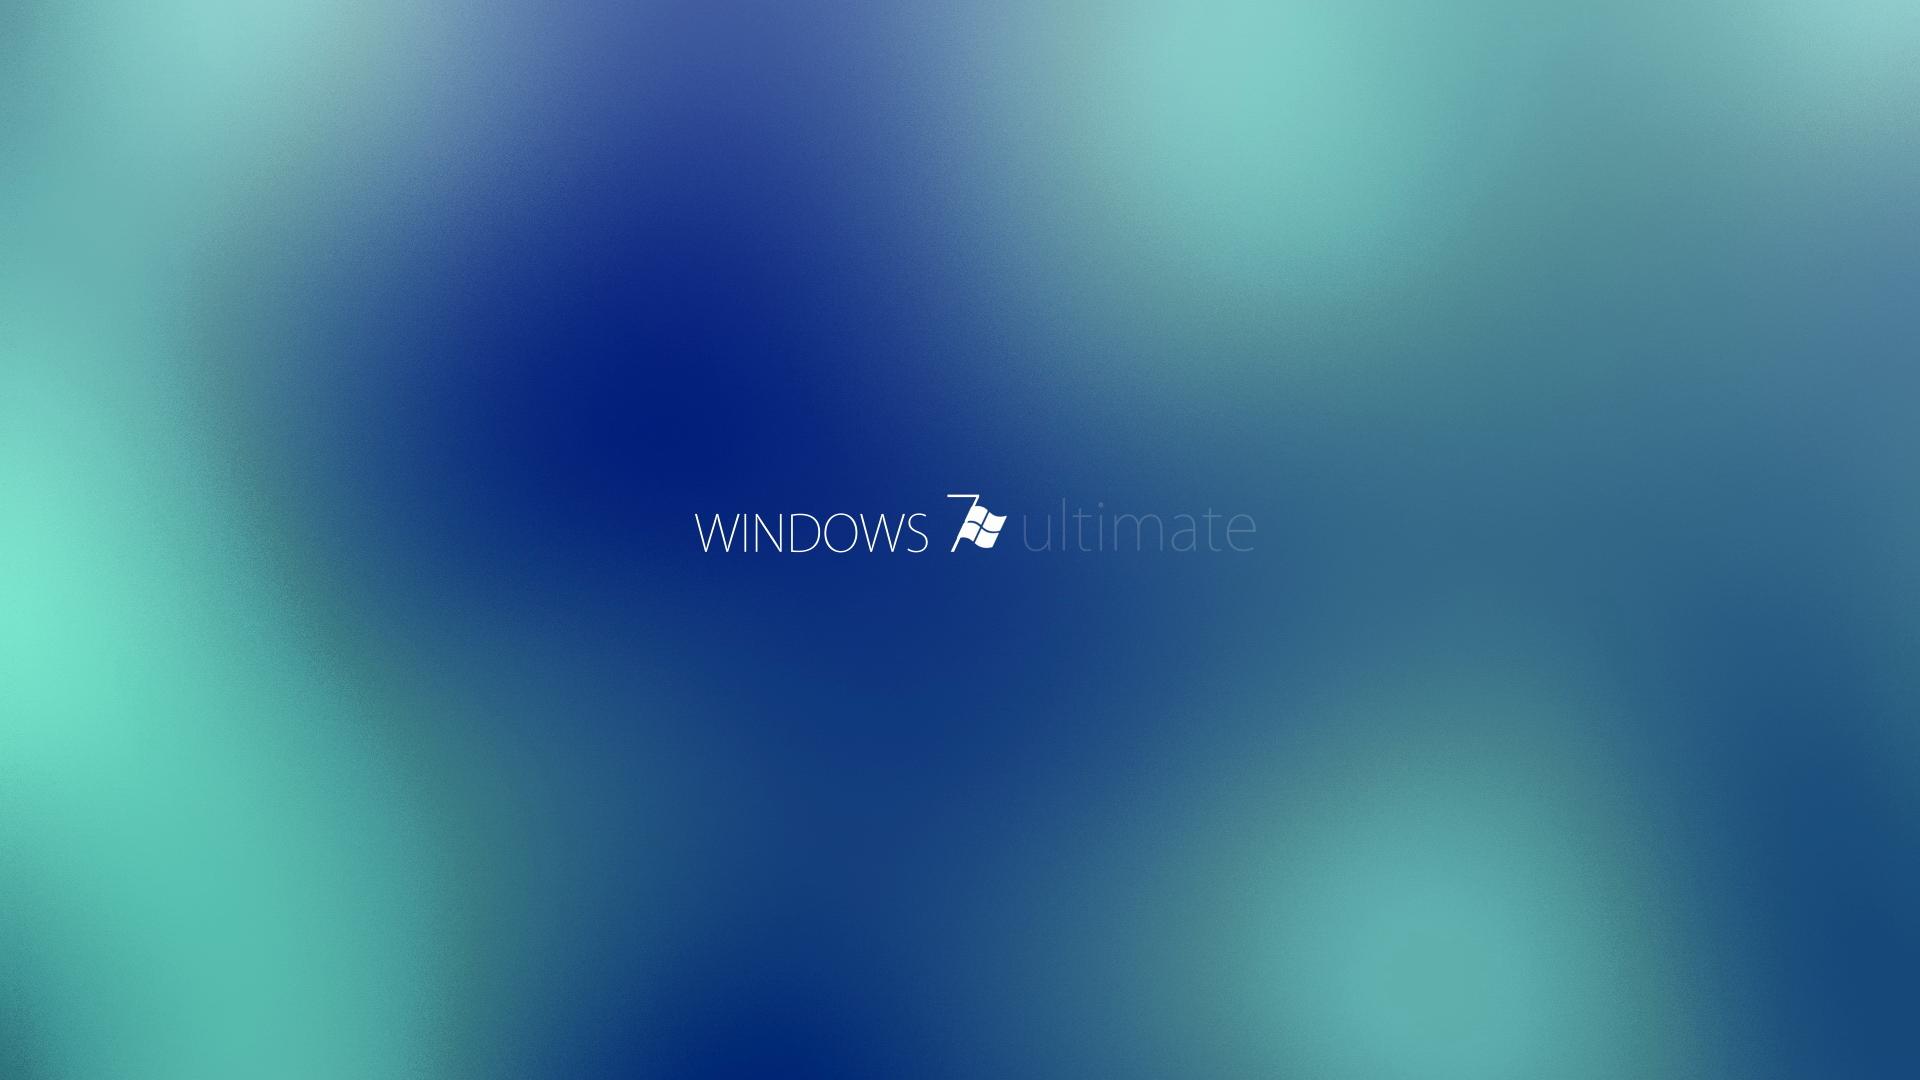 Windows Ultimate Desktop Background On Markinternational Info